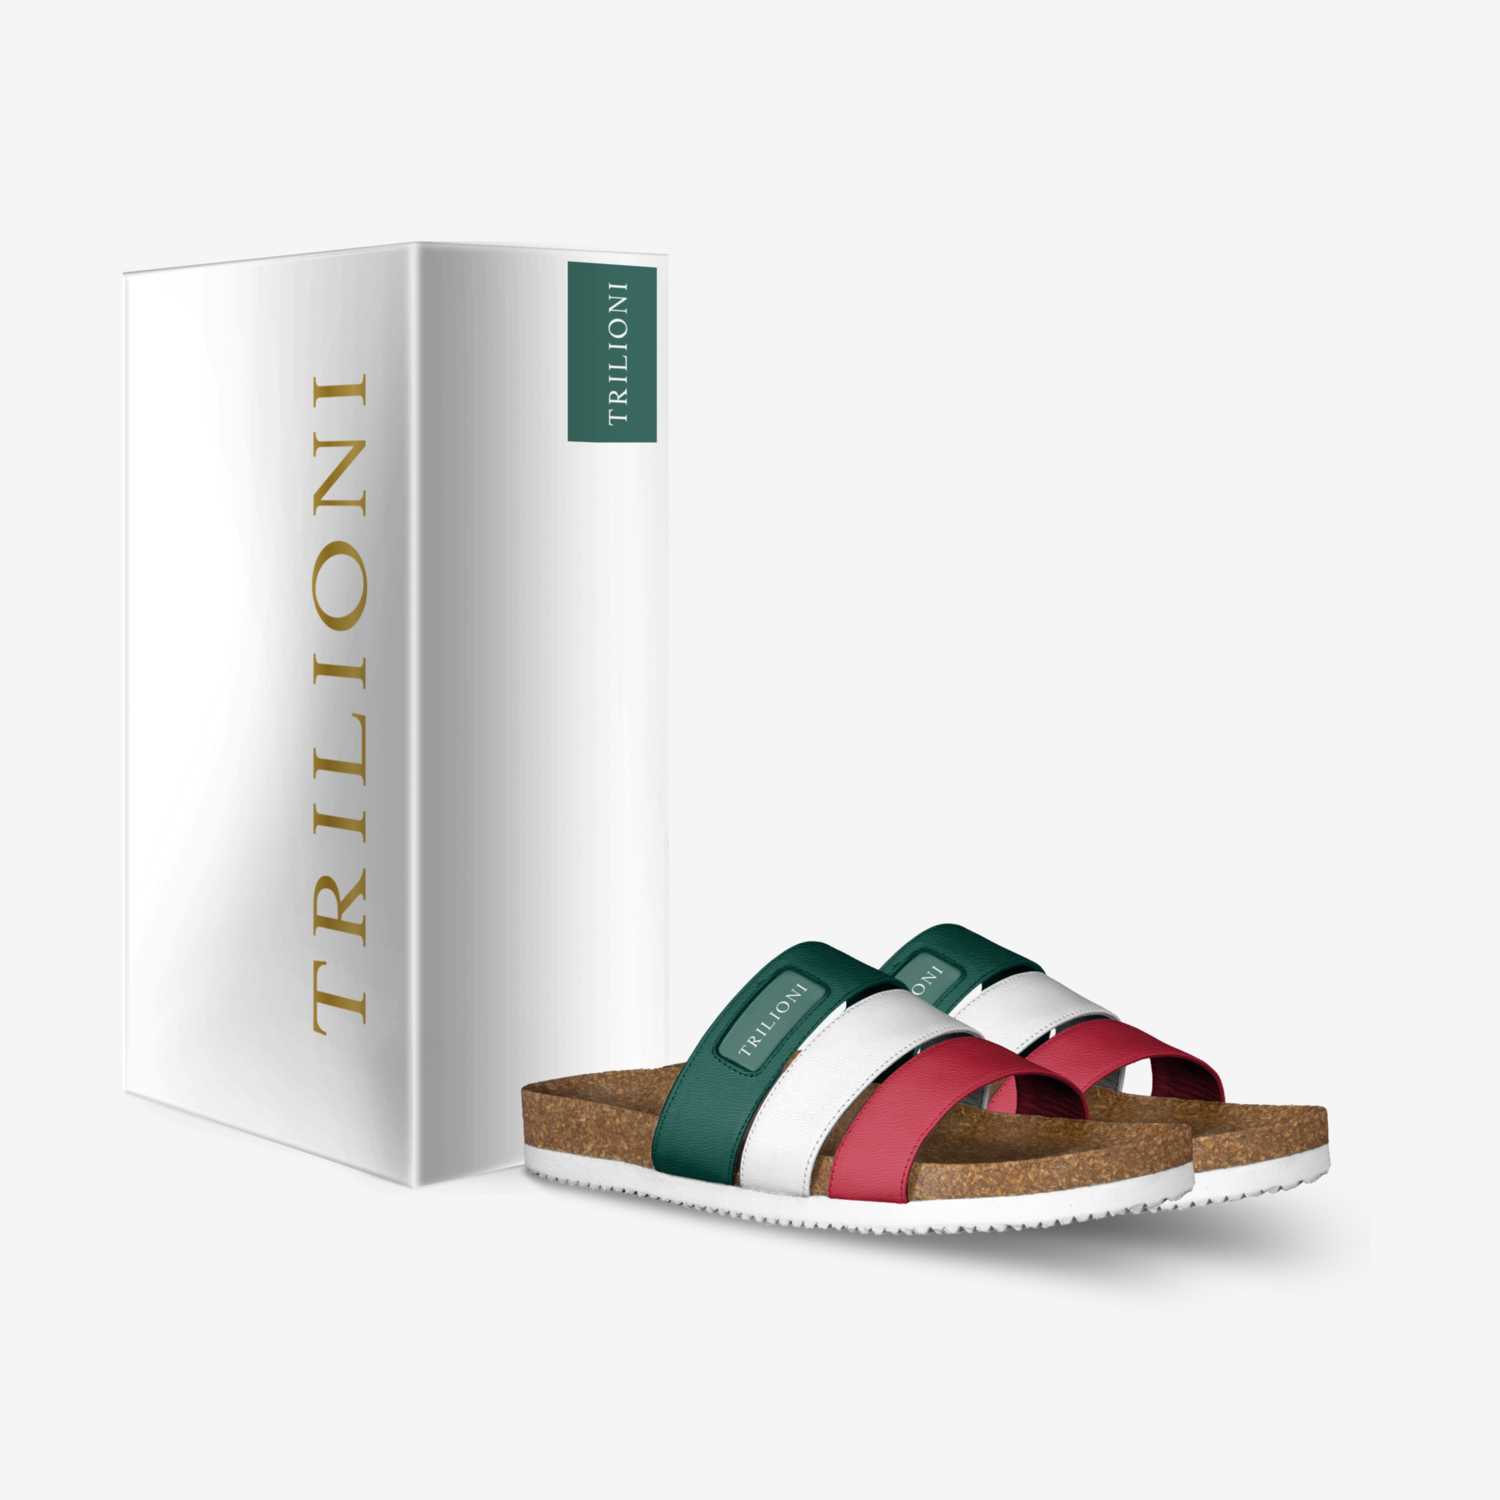 Trilioni Aquatico custom made in Italy shoes by Jay Frye | Box view